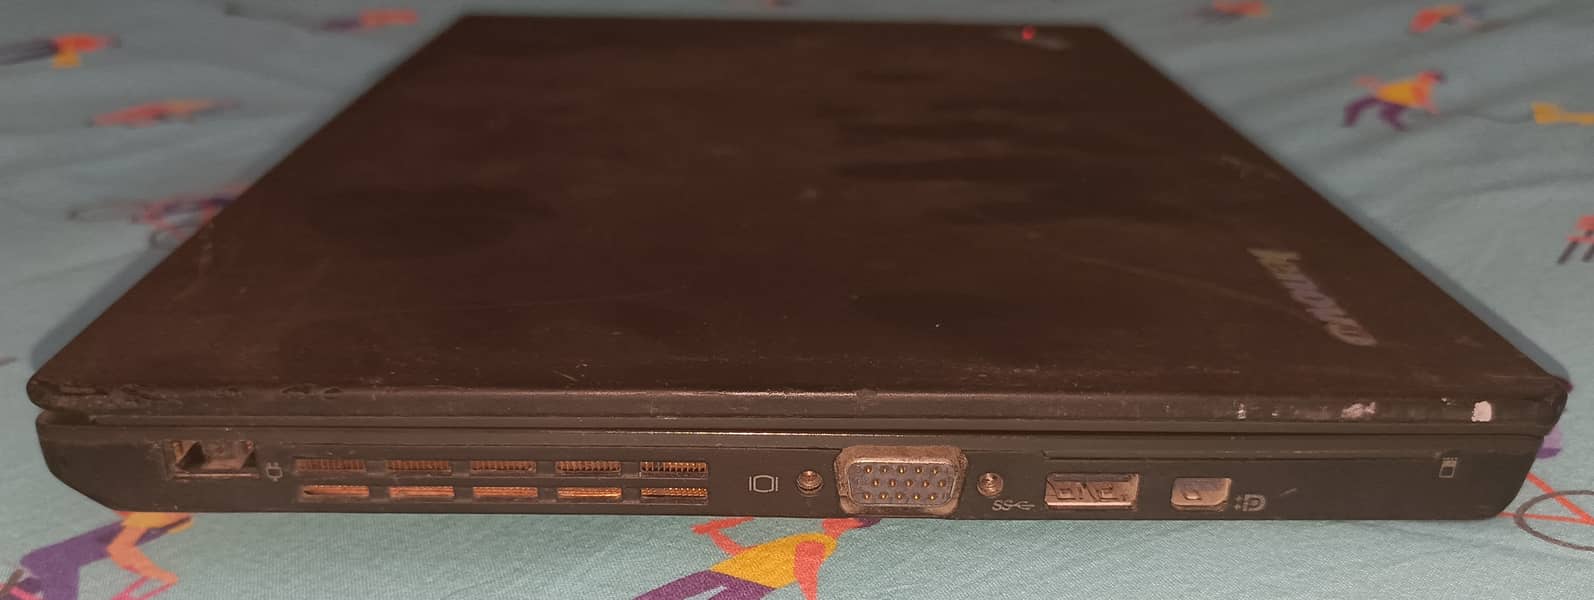 Lenovo Thinkpad X240 - Core i5-4200U 12.5"LCD RAM4GB SSD128GB 5